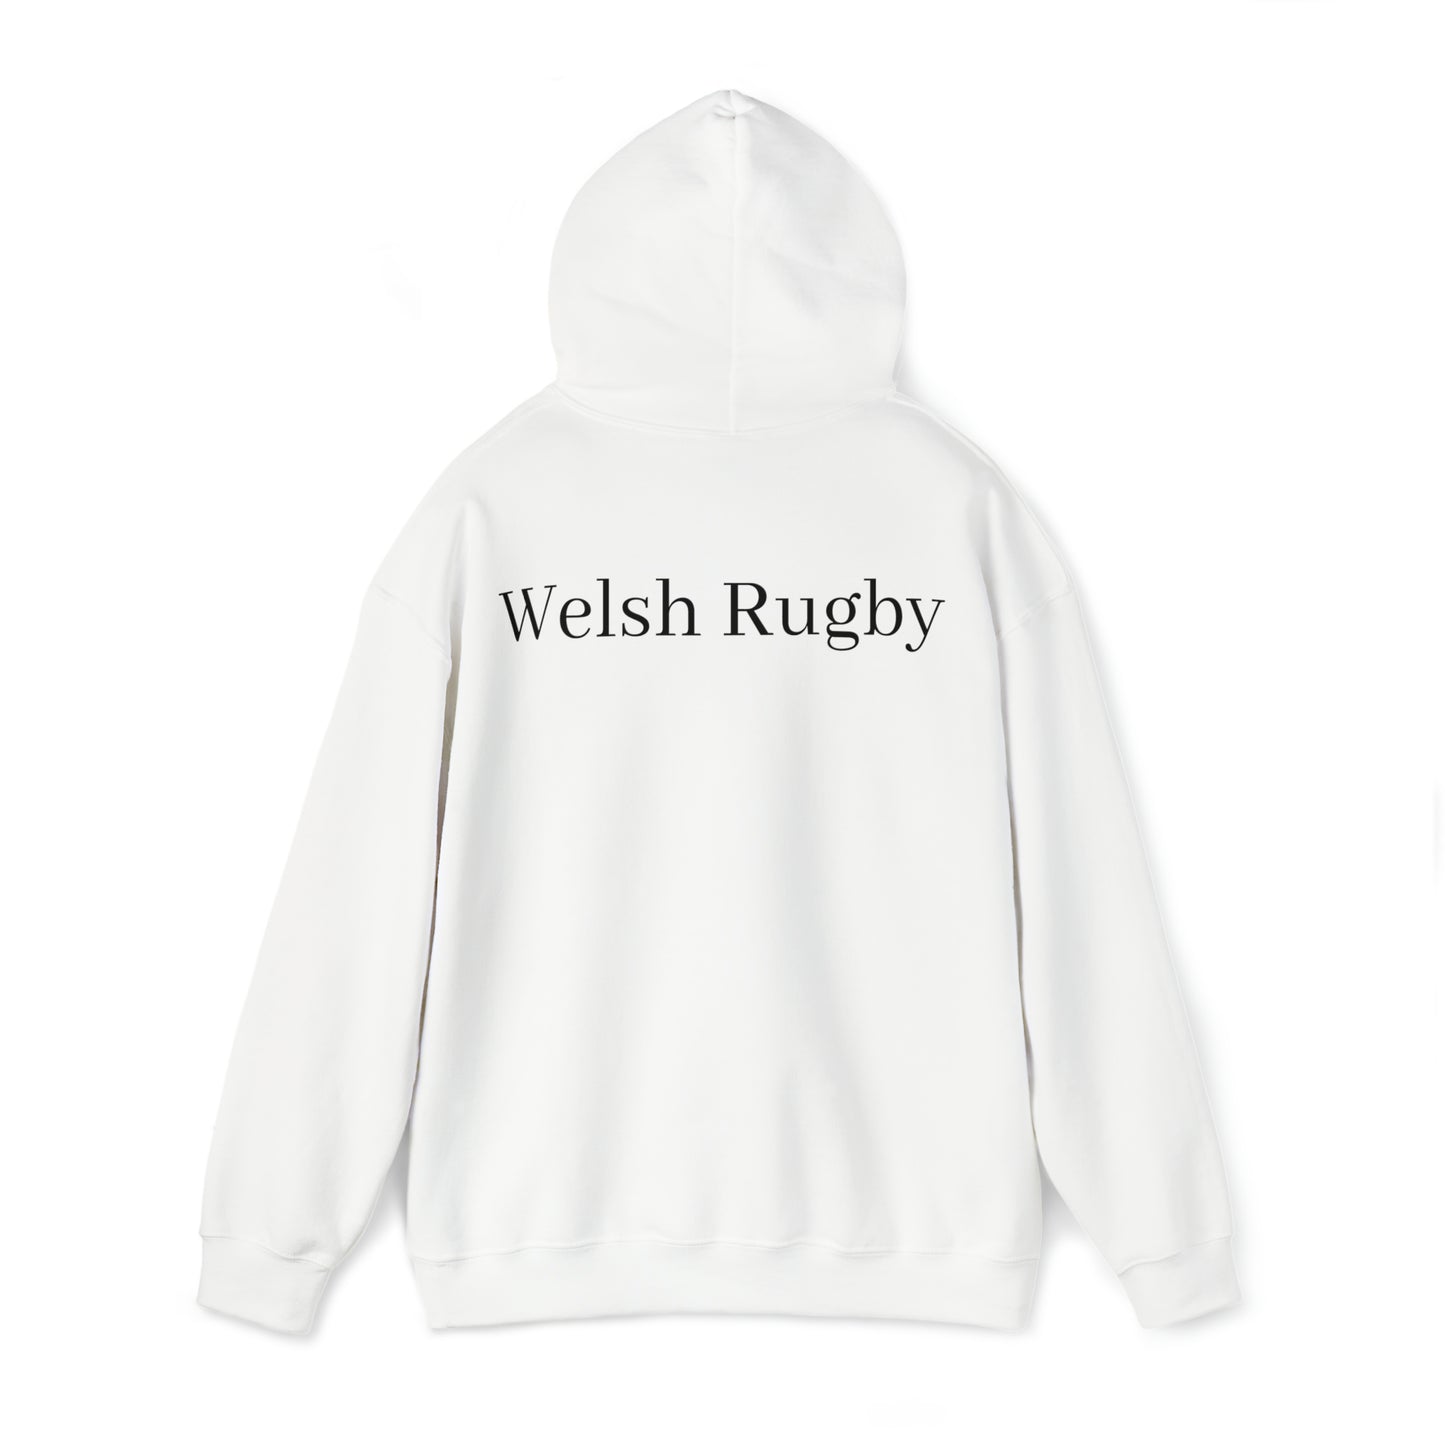 Wales Celebrating - light hoodies